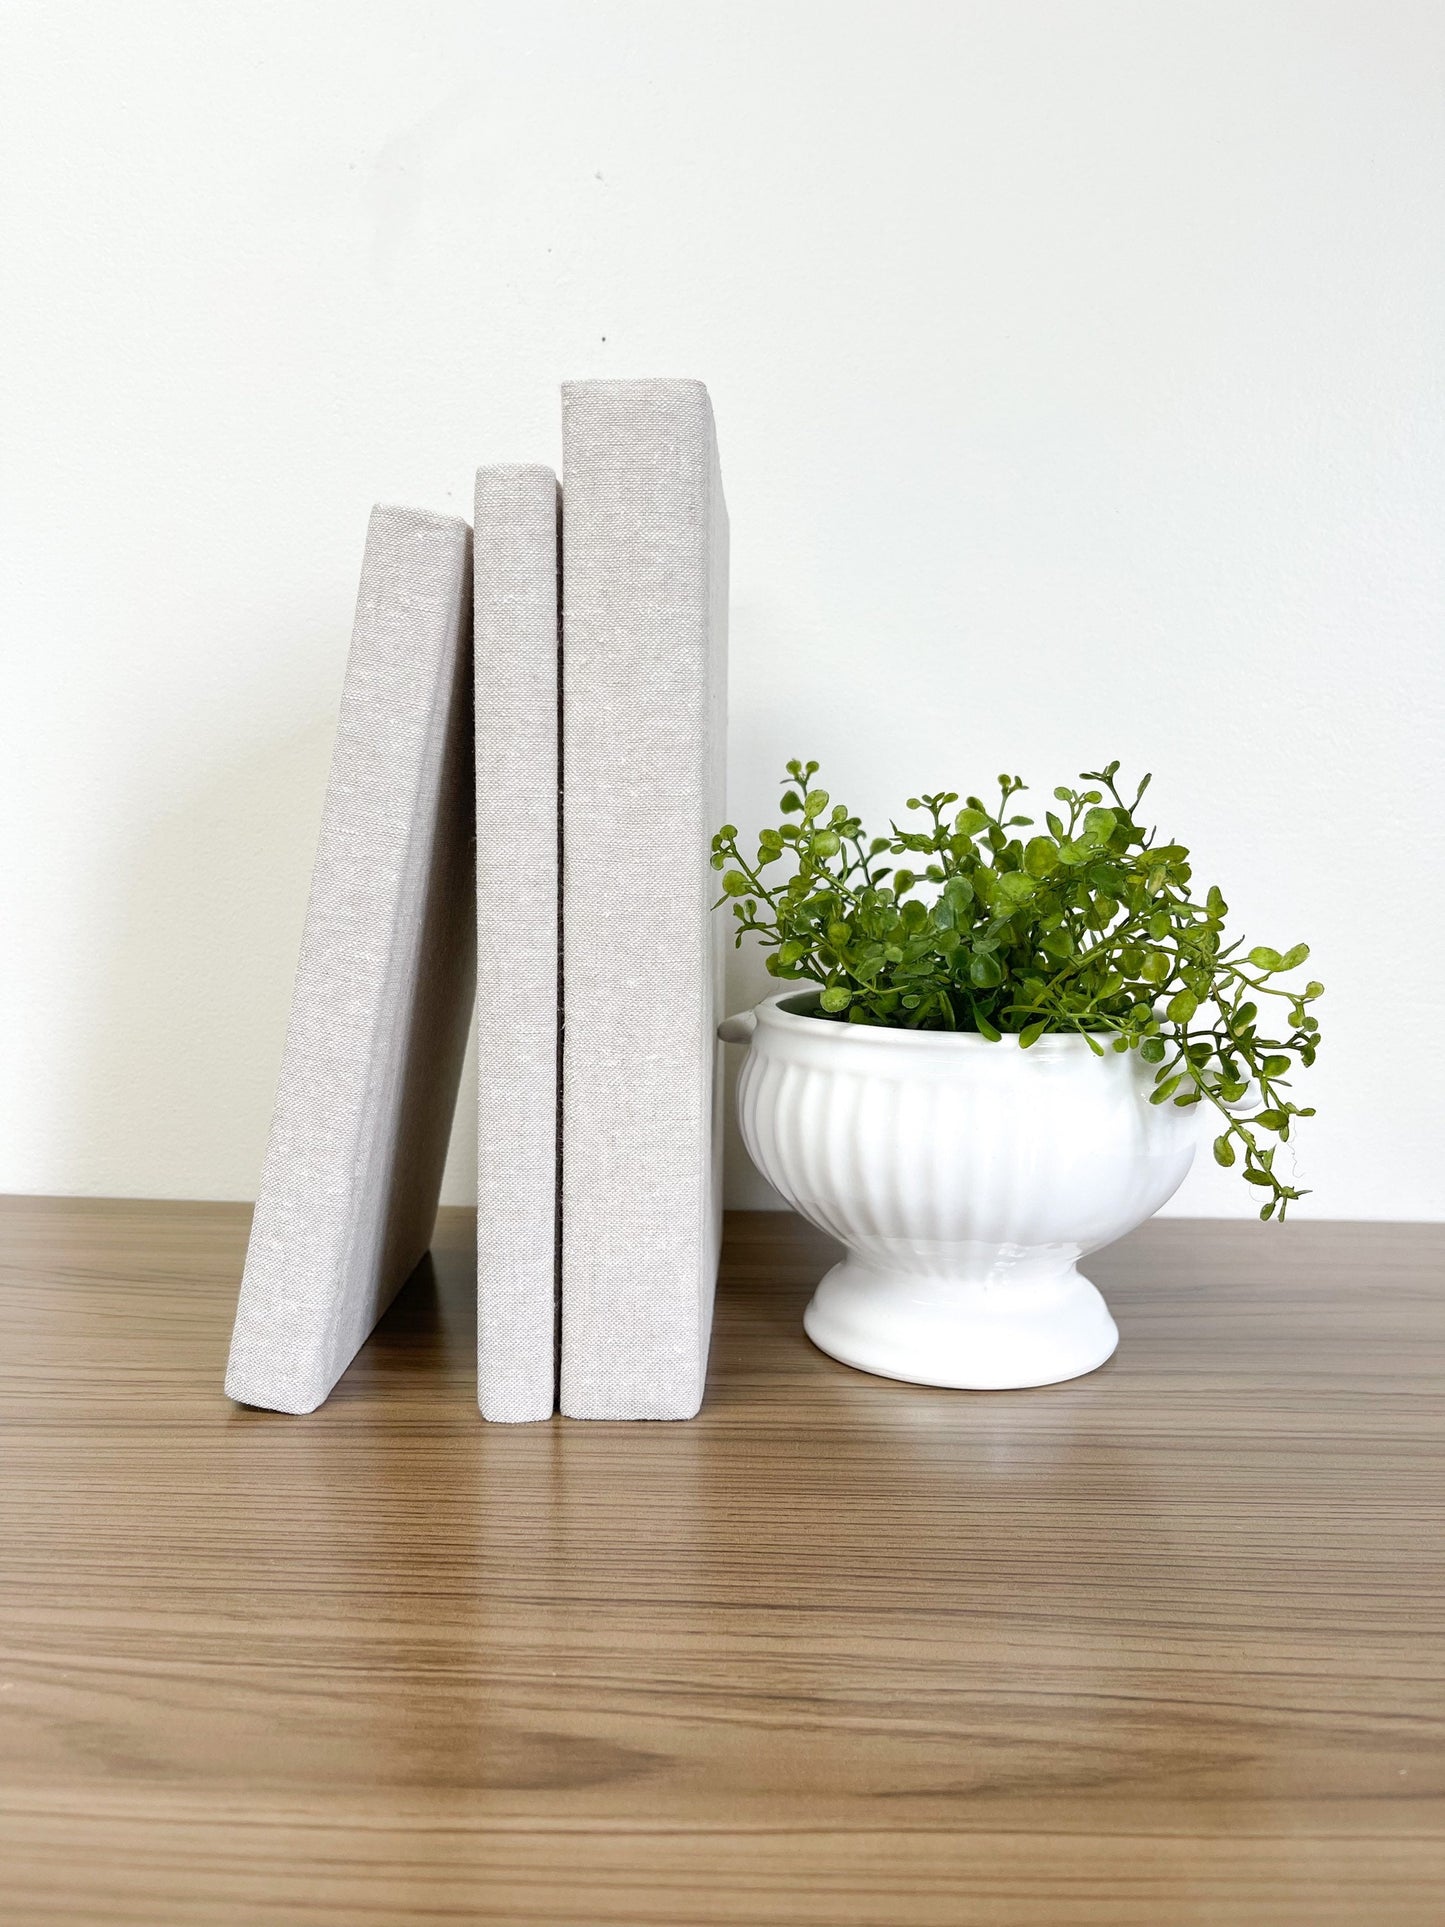 Books for Shelf Decor and White Vase